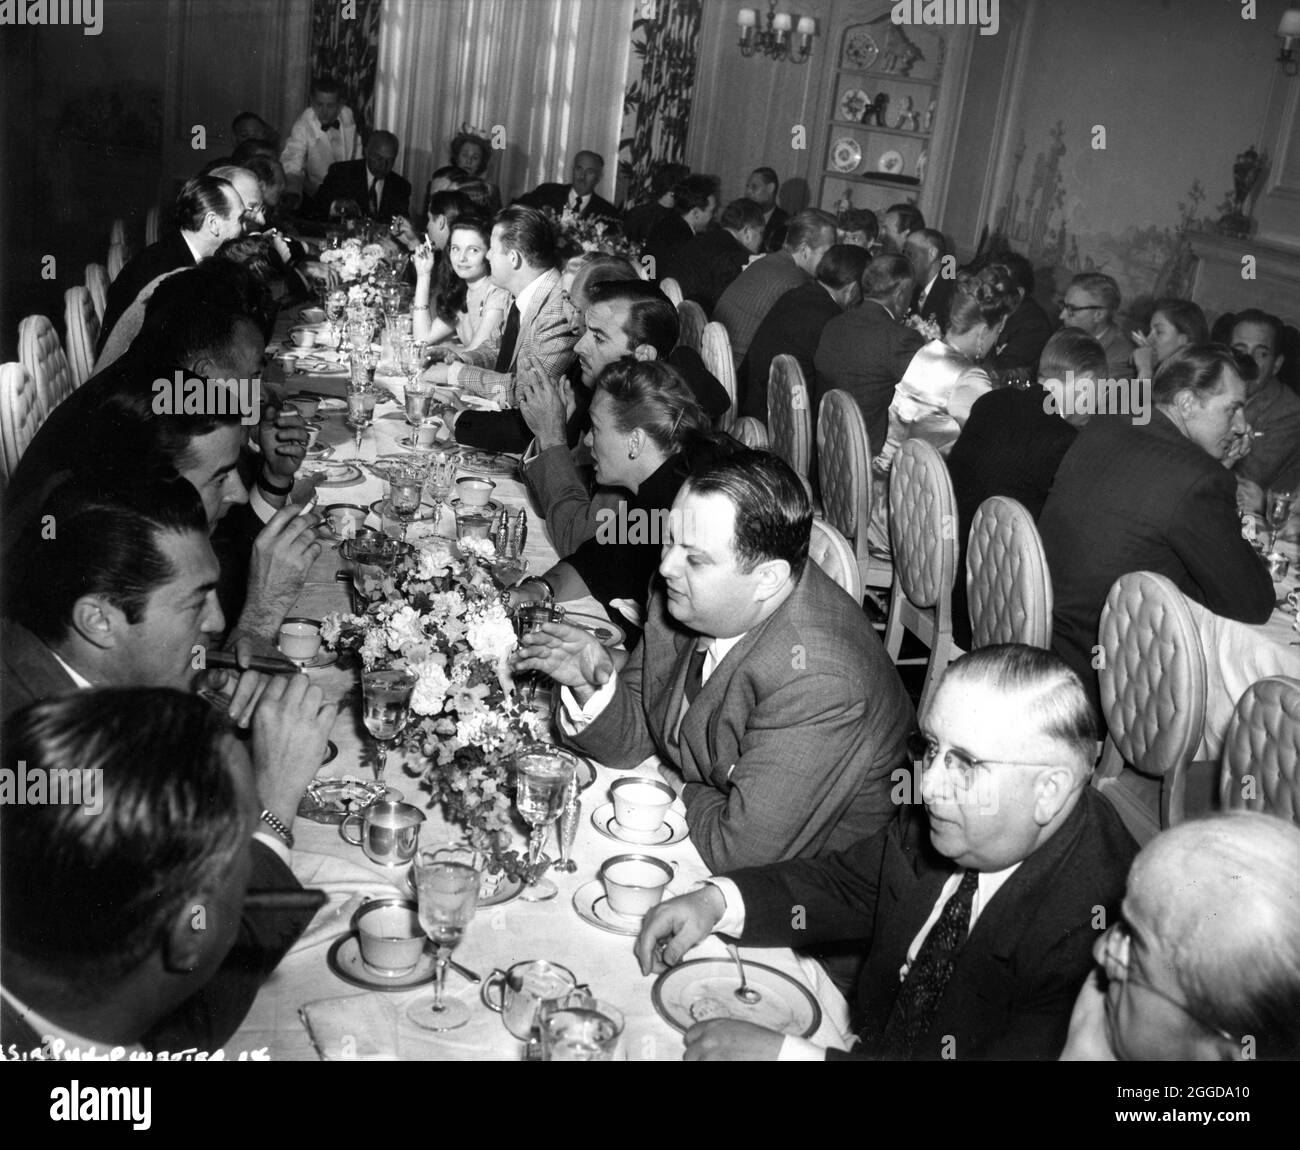 HARRY WARNER e JACK L. WARNER (sul retro) ospitano un pranzo per il British Film Executive Sir Philip Warter al Warner Brothers Studio circa 1947 con ospiti tra cui il direttore VINCENT SHERMAN EVE ARDEN ZACHARY SCOTT JACK CARSON JANE WYMAN LAUREN BALL HUMPHREY BOGART e BRUCE BENNETT Advertisation for Warner Bros Foto Stock